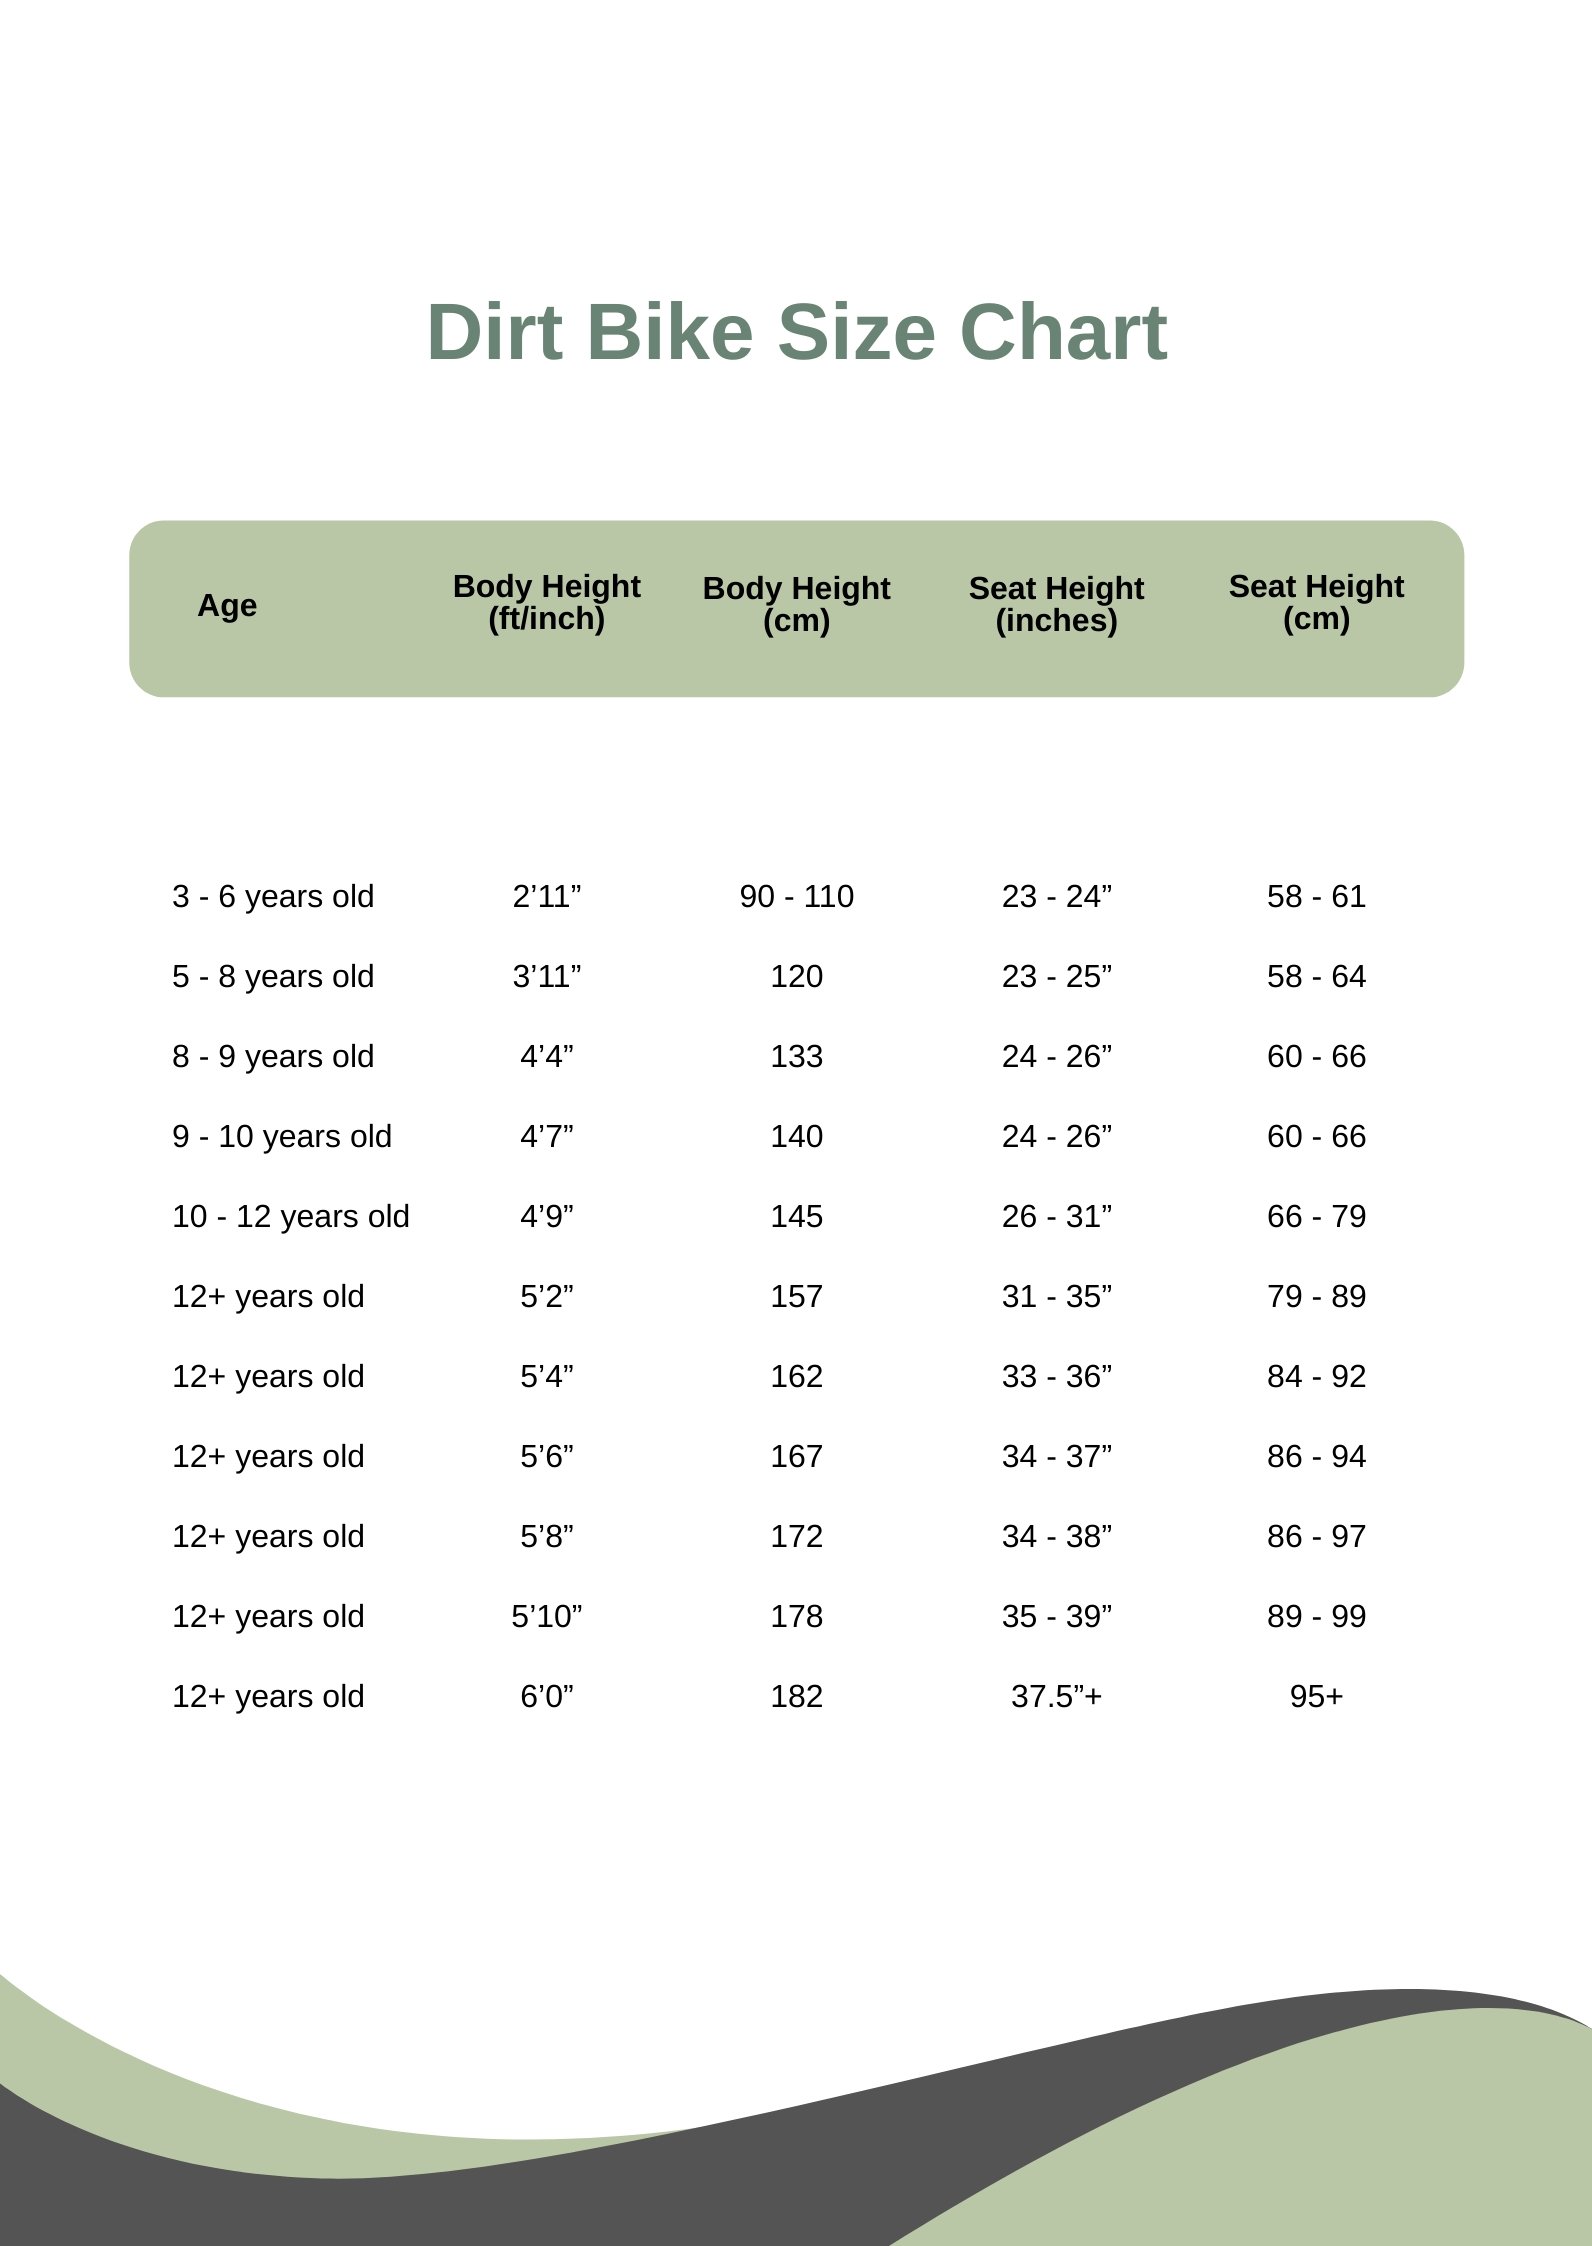 Dirt Bike Size Chart in PDF